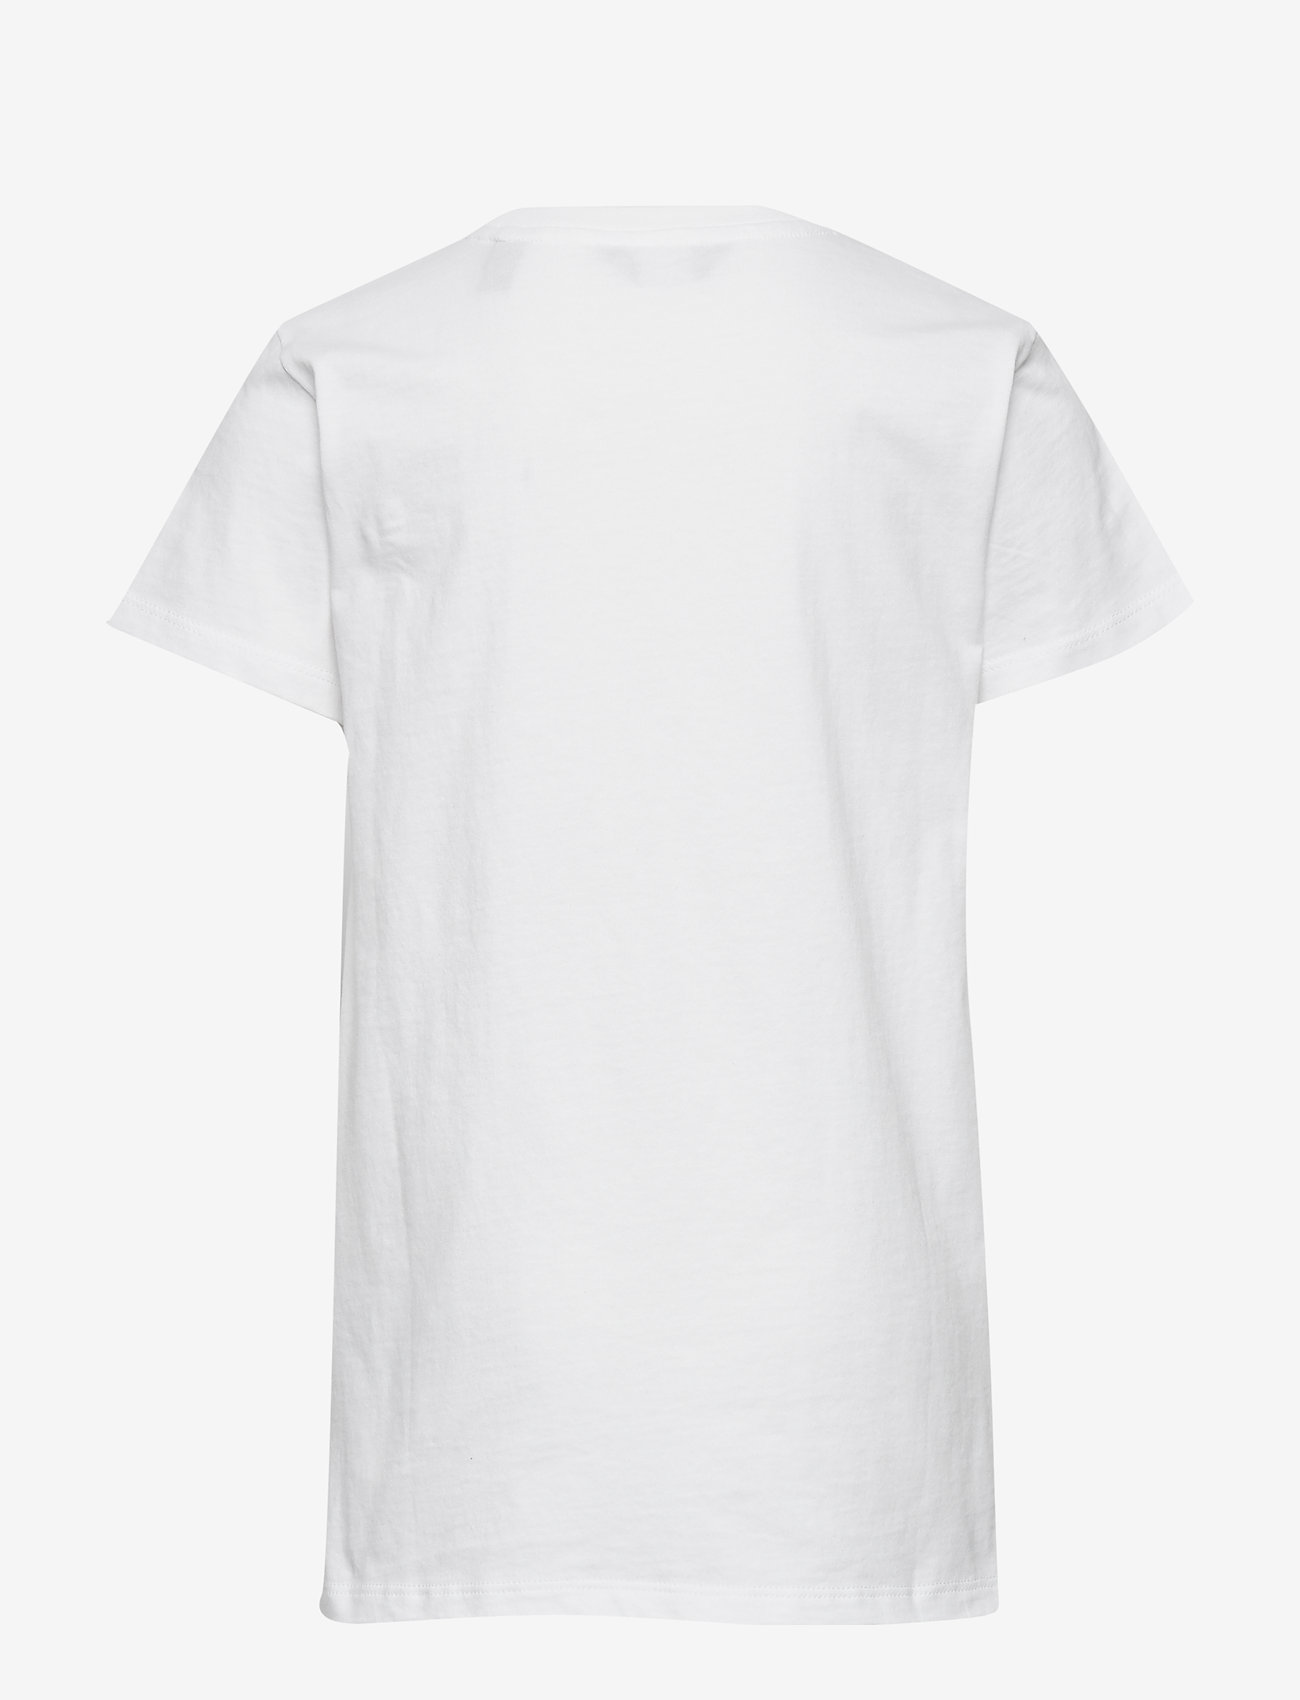 GANT - GANT SHIELD SS T-SHIRT - pattern short-sleeved t-shirt - white - 1